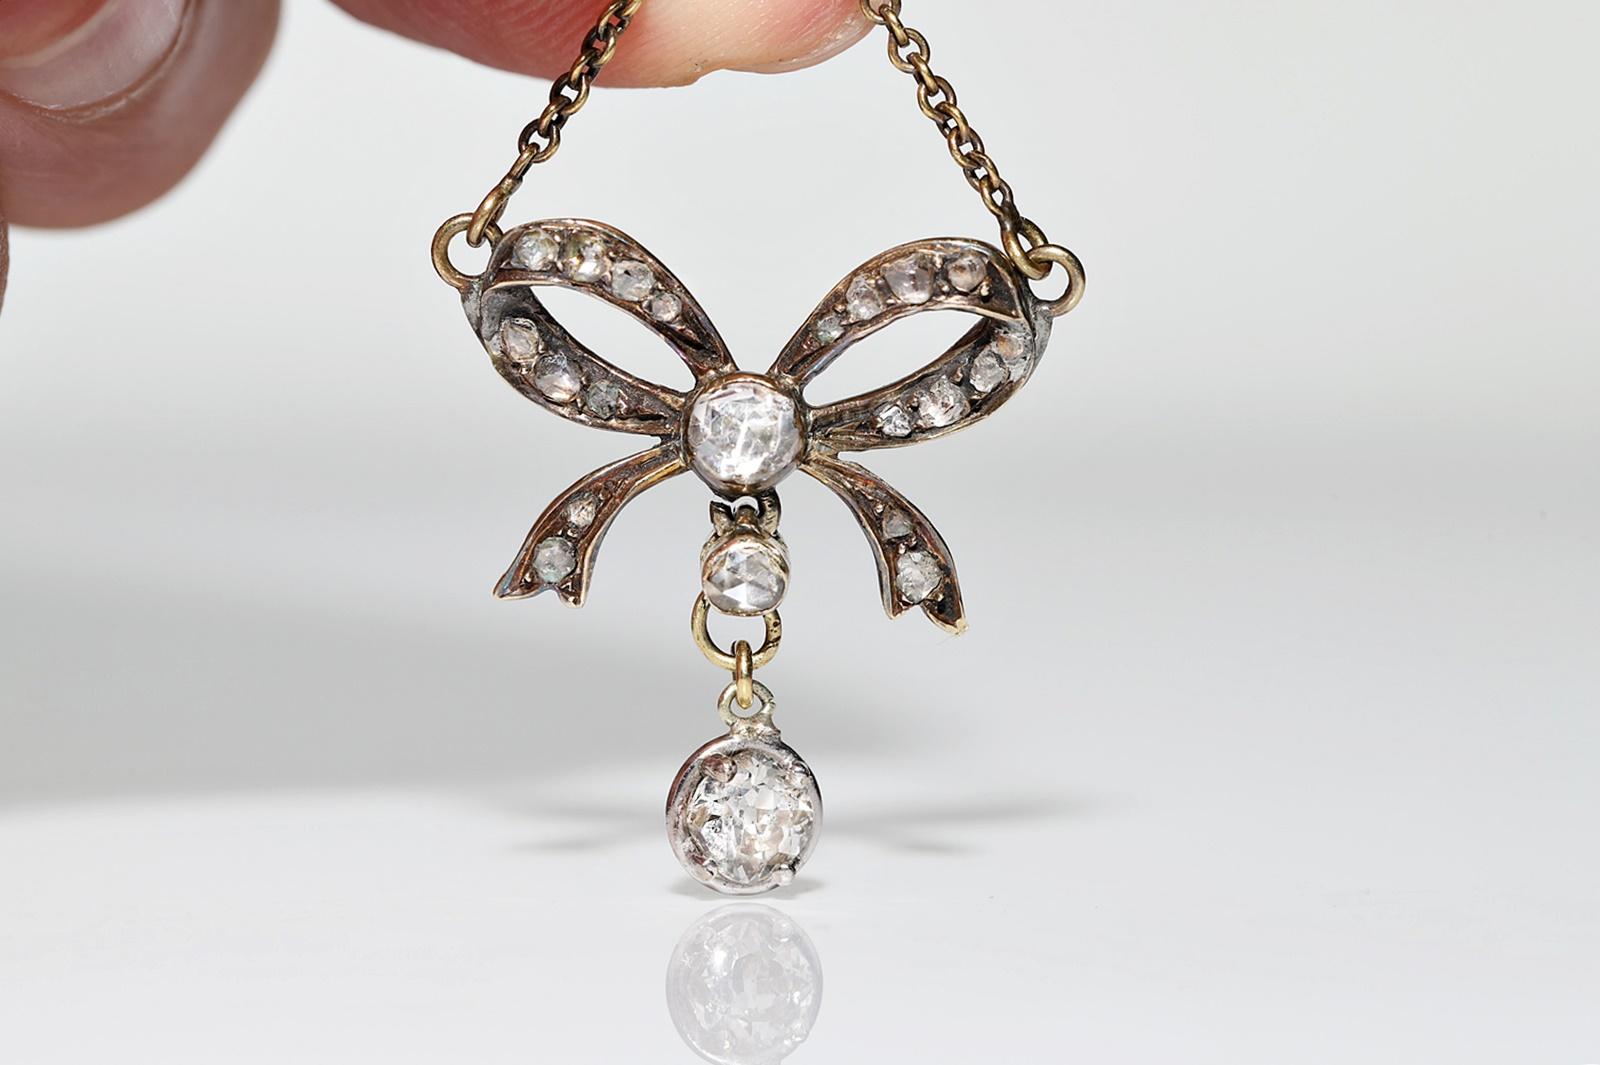 Antique Circa 1900s 14k Gold Natural Diamond Decorated Pretty Necklace For Sale 4